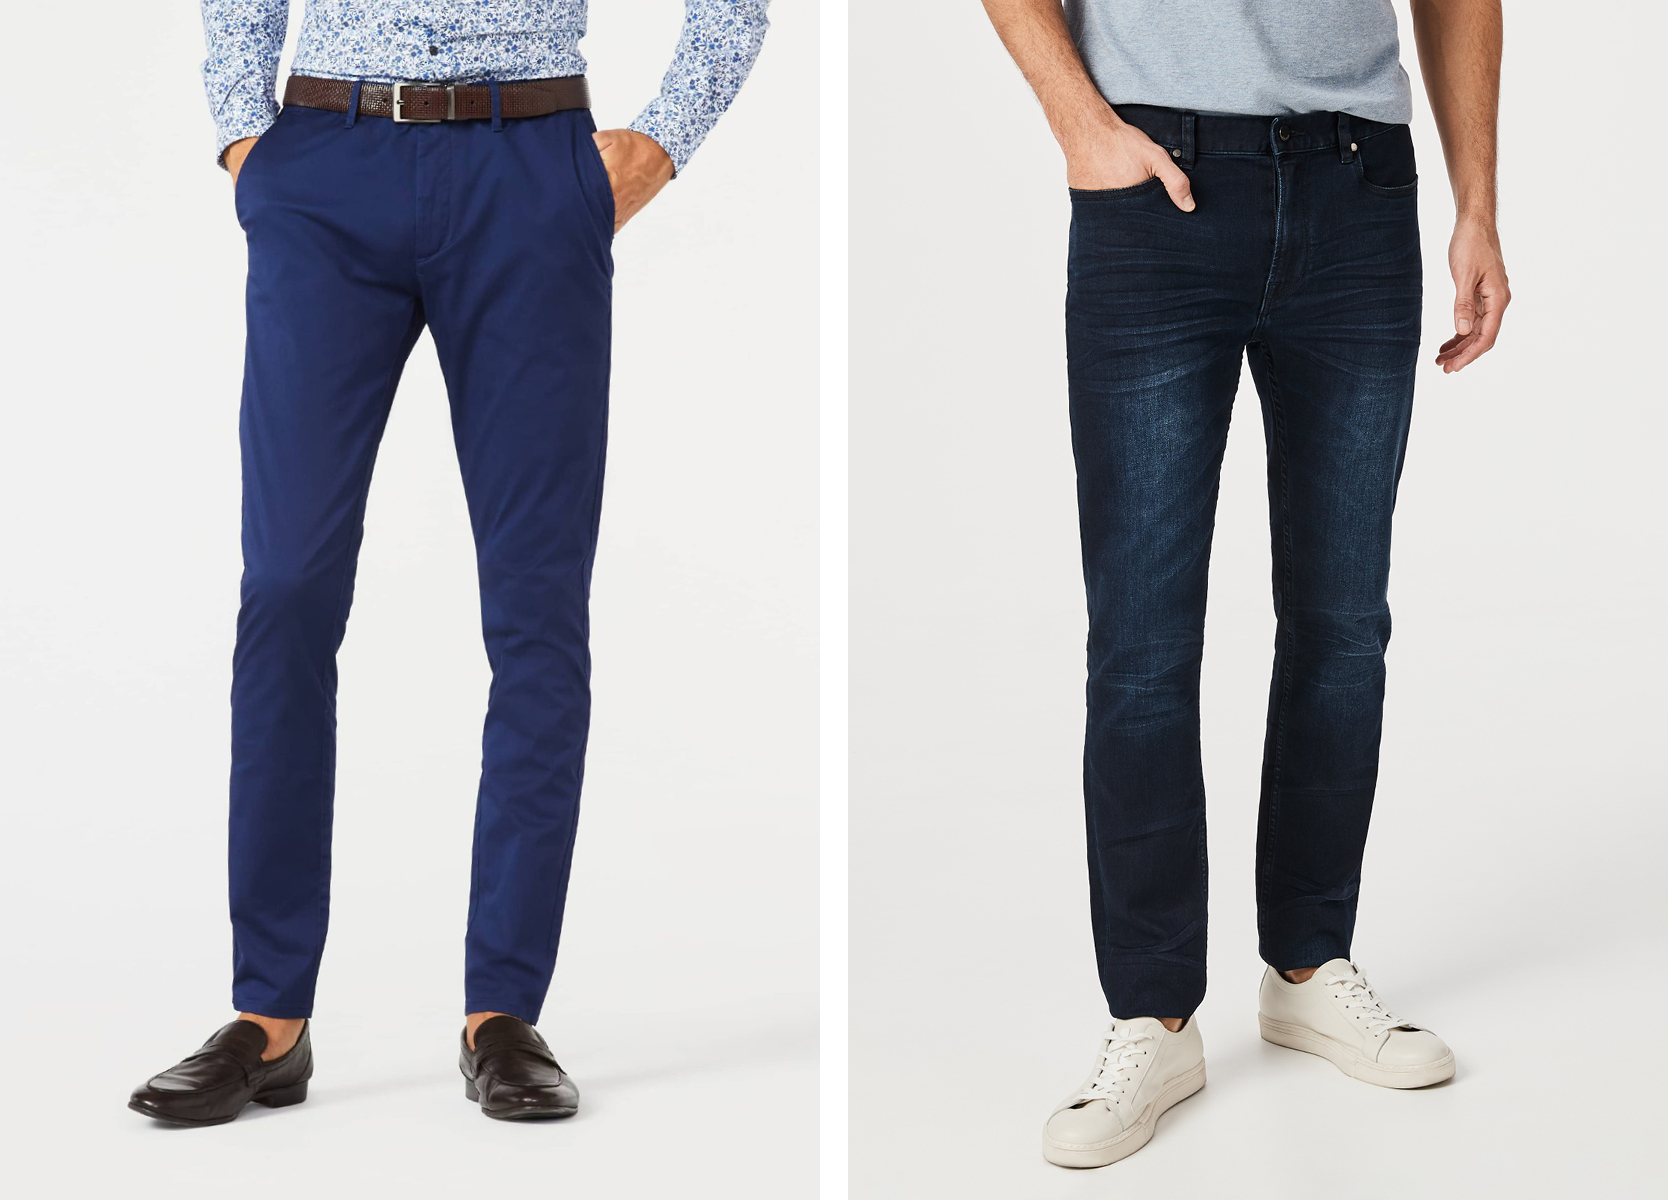 Side by side image of dark blue chinos vs. dark indigo jeans